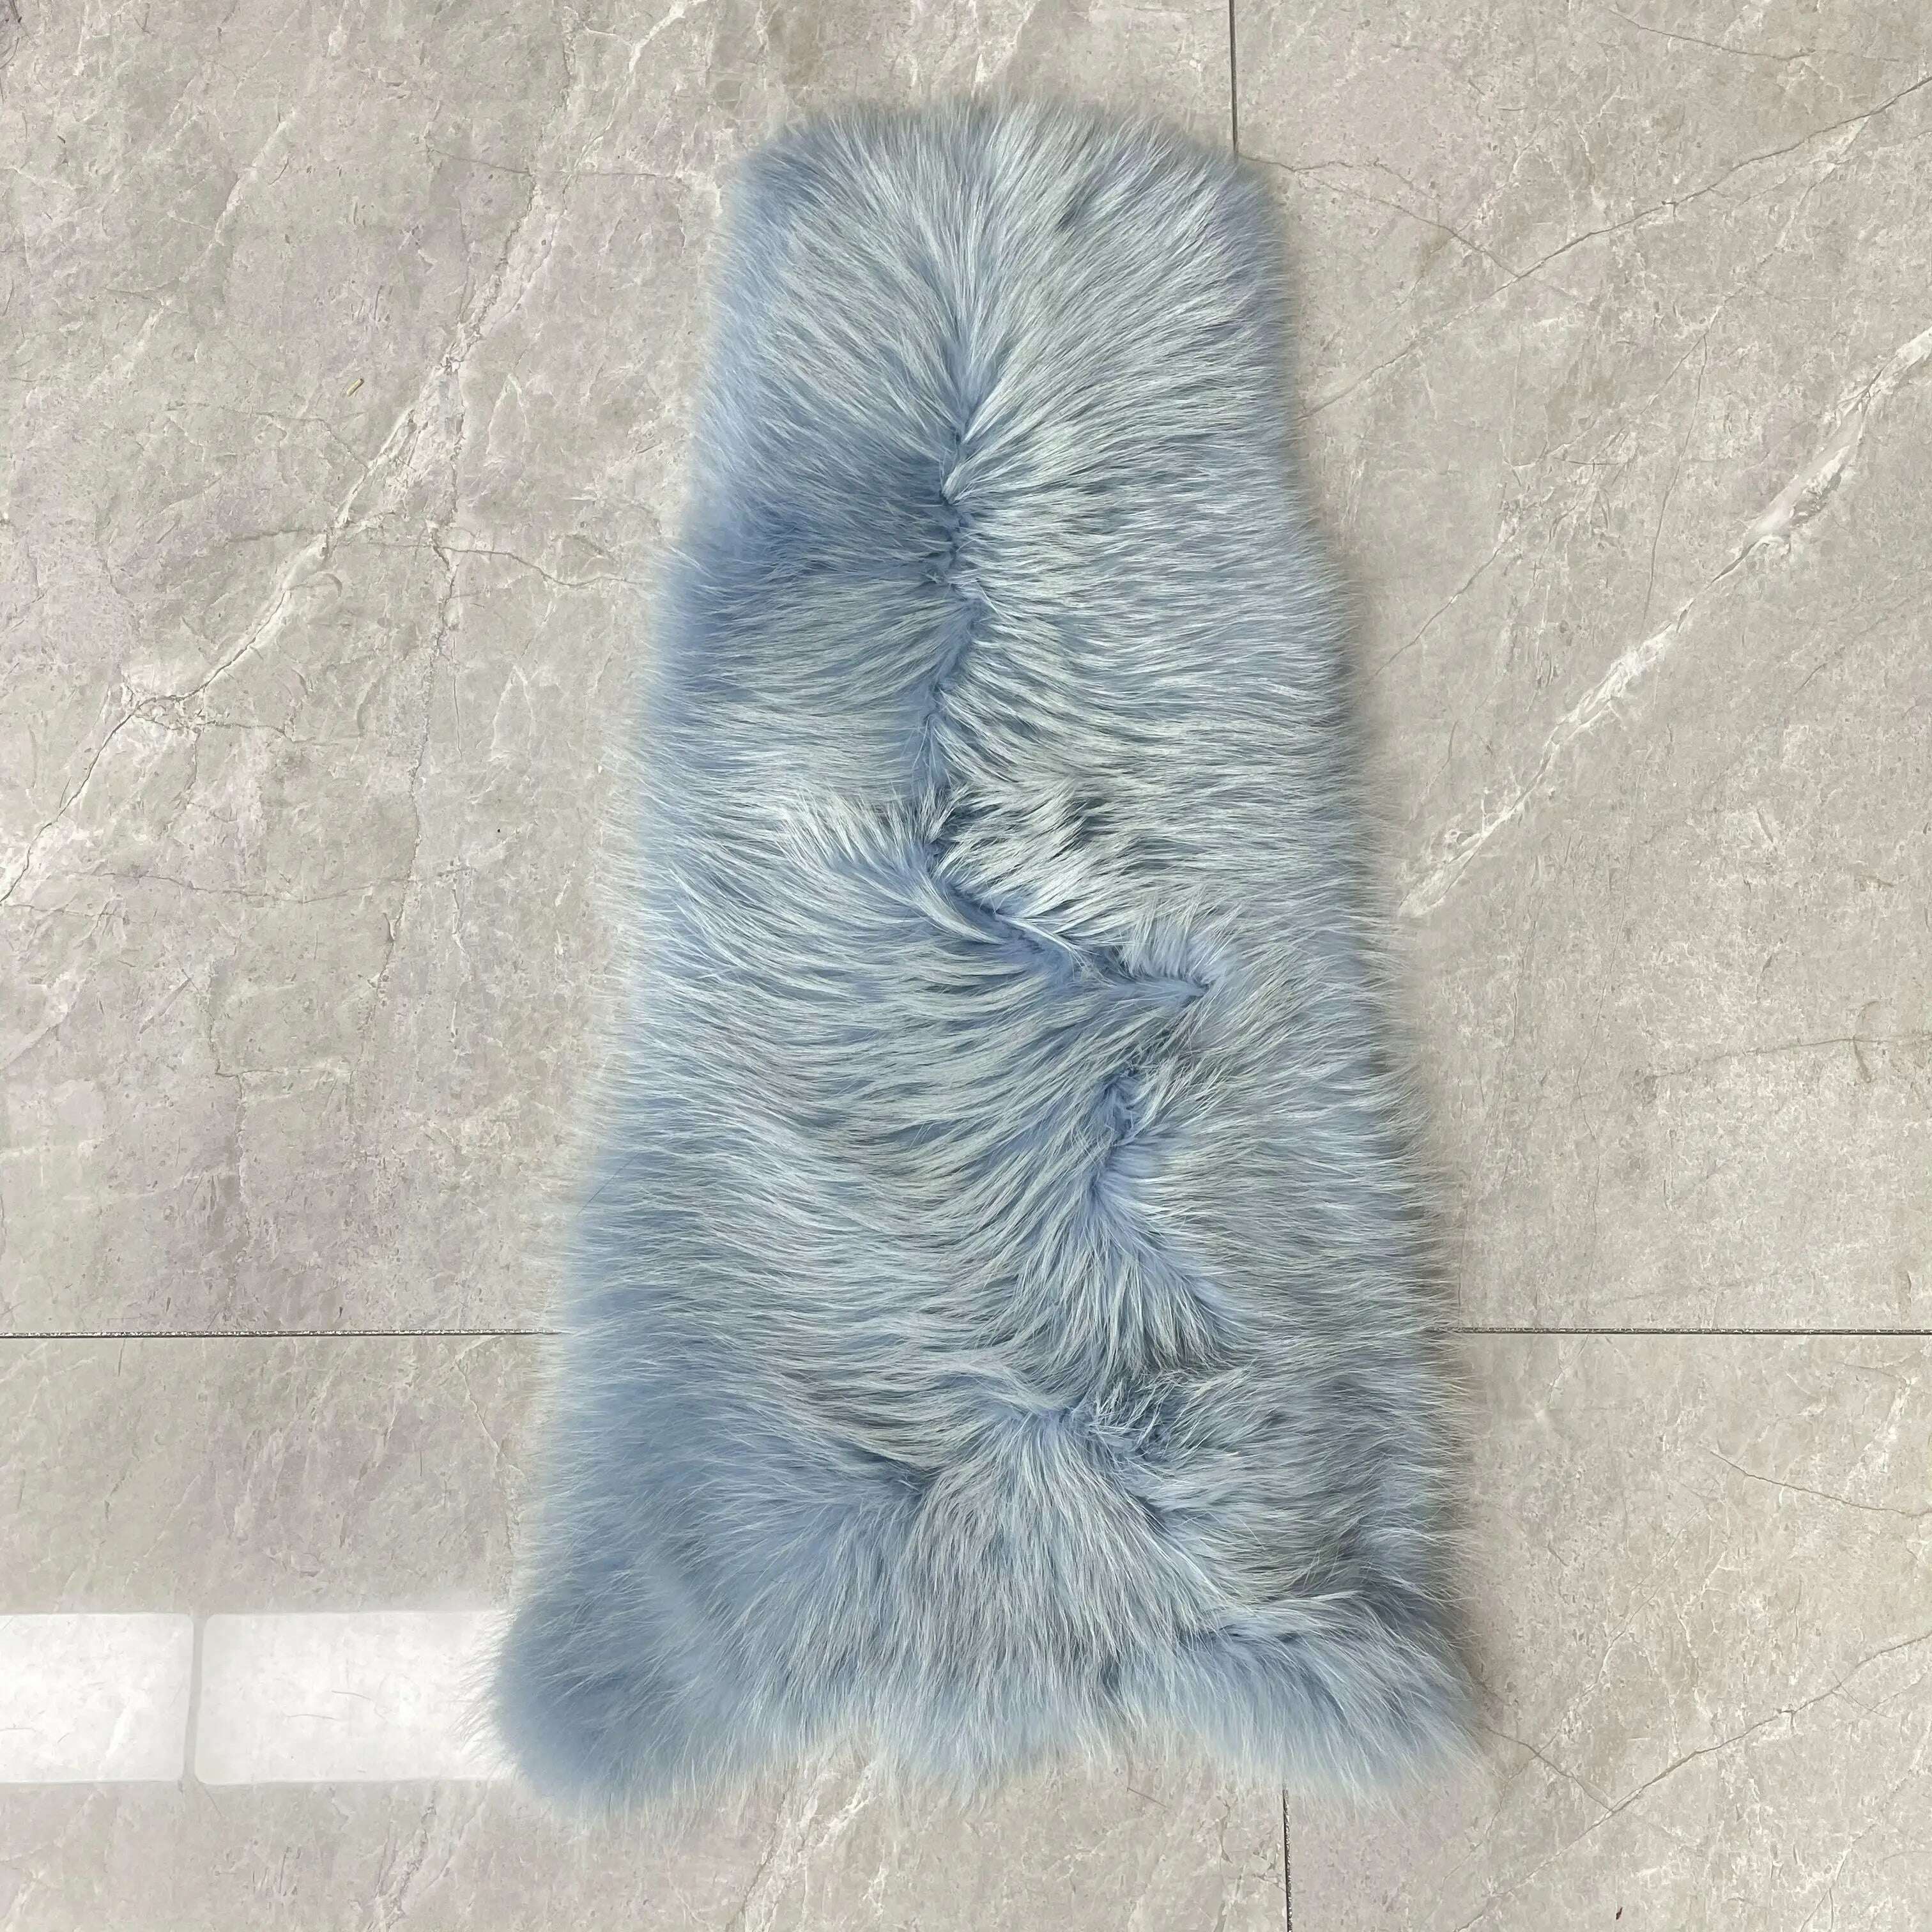 KIMLUD, Real Raccoon Fur Jacket Men Fashion Coat Winter Warm Long Style, Light Blue / XS(88cm), KIMLUD Women's Clothes